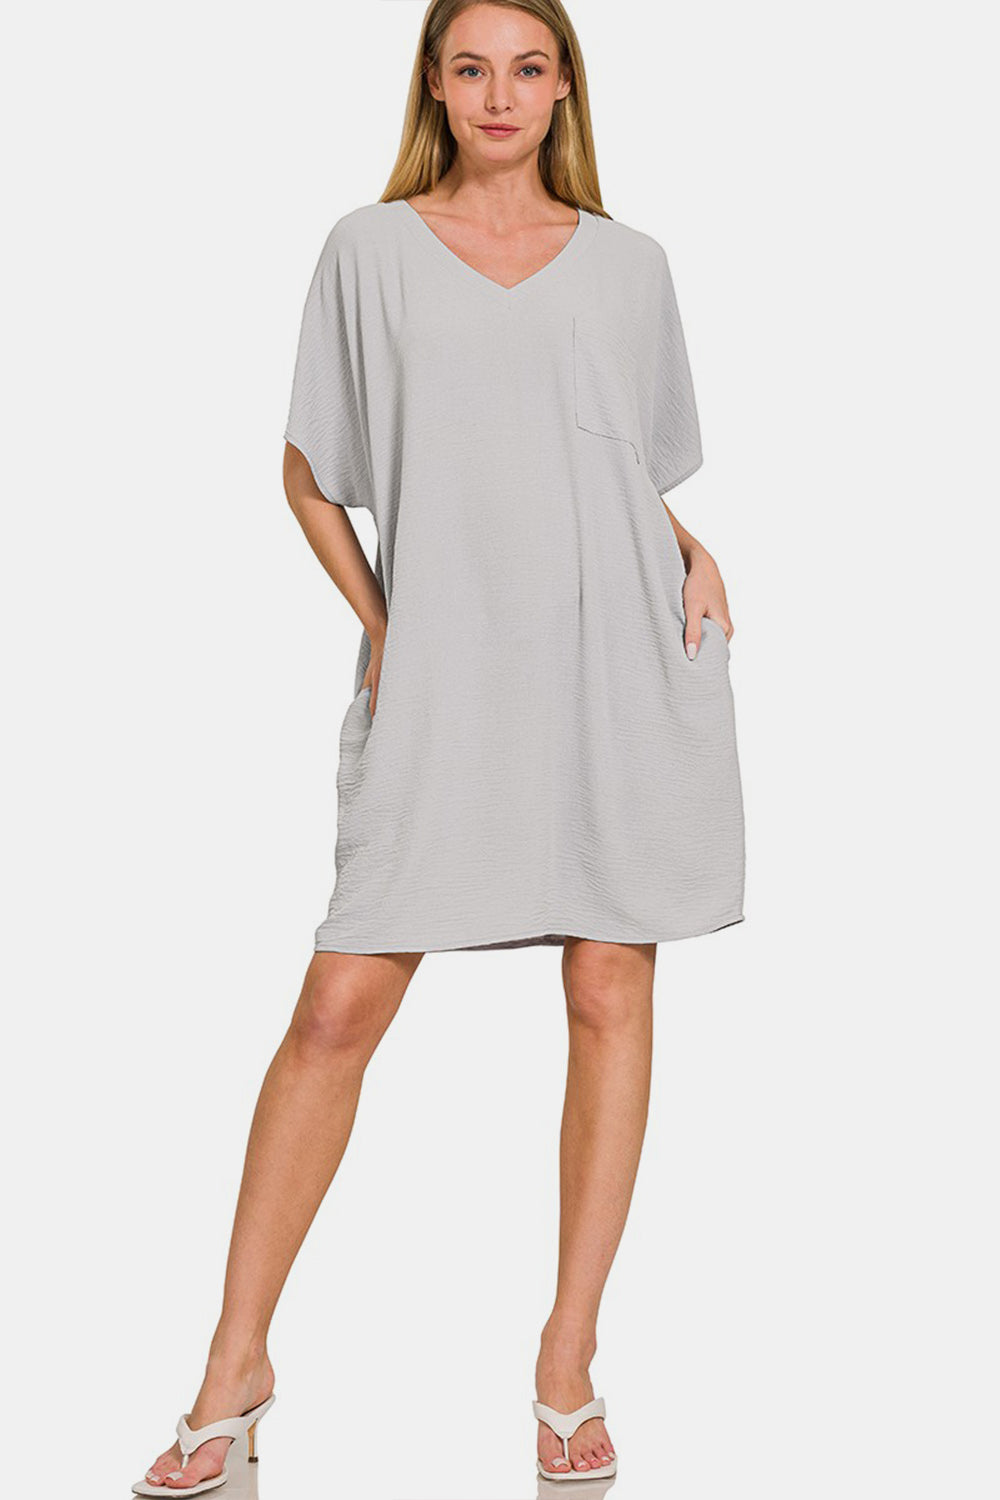 Zenana Light Grey Airflow V-Neck Tee Dress with Pockets Trendsi